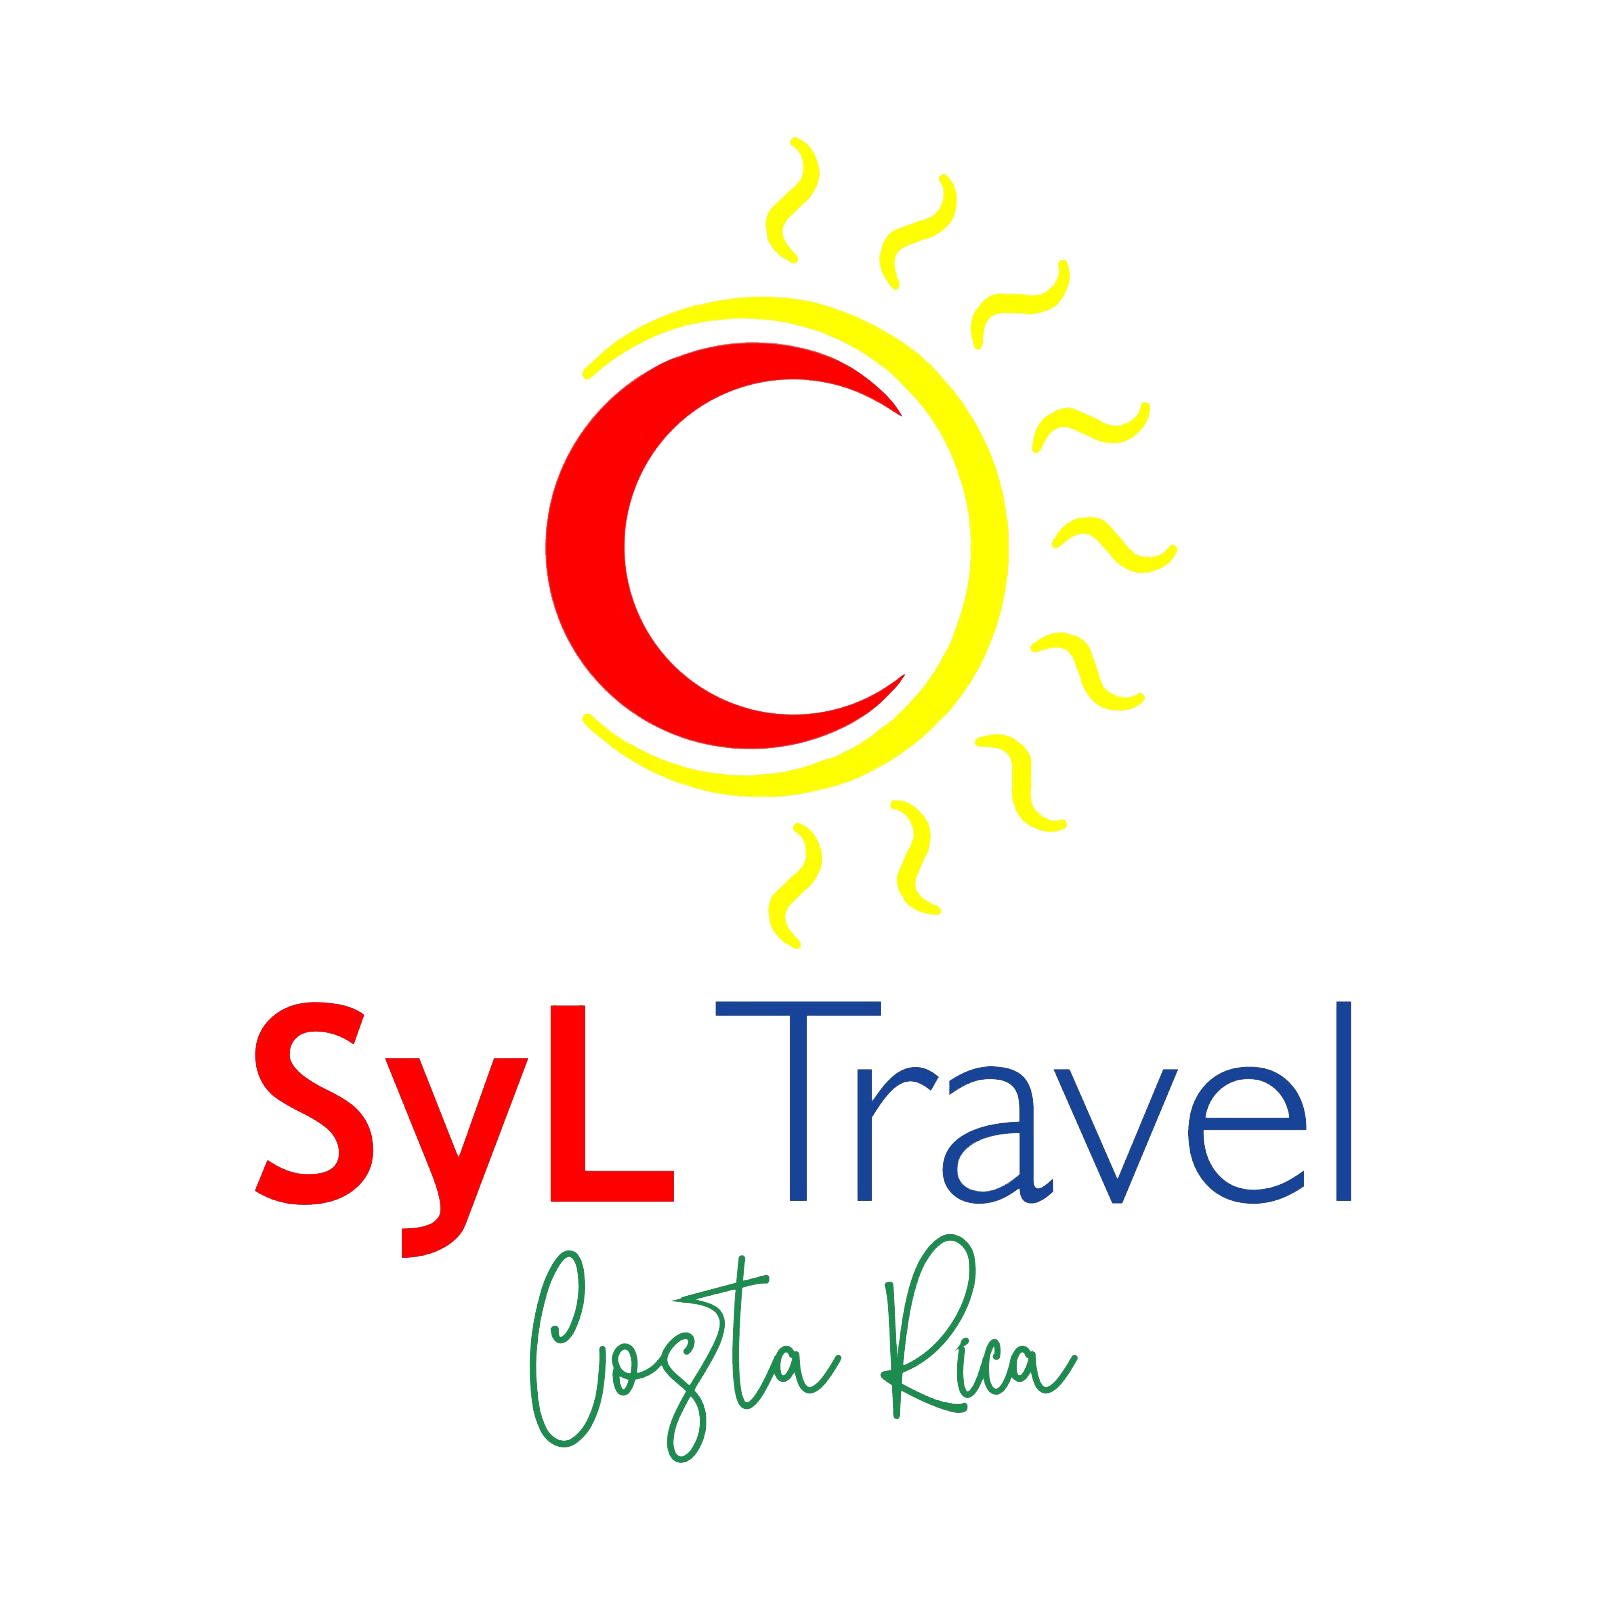 Syl Travel Costa Rica Excursion Transfers